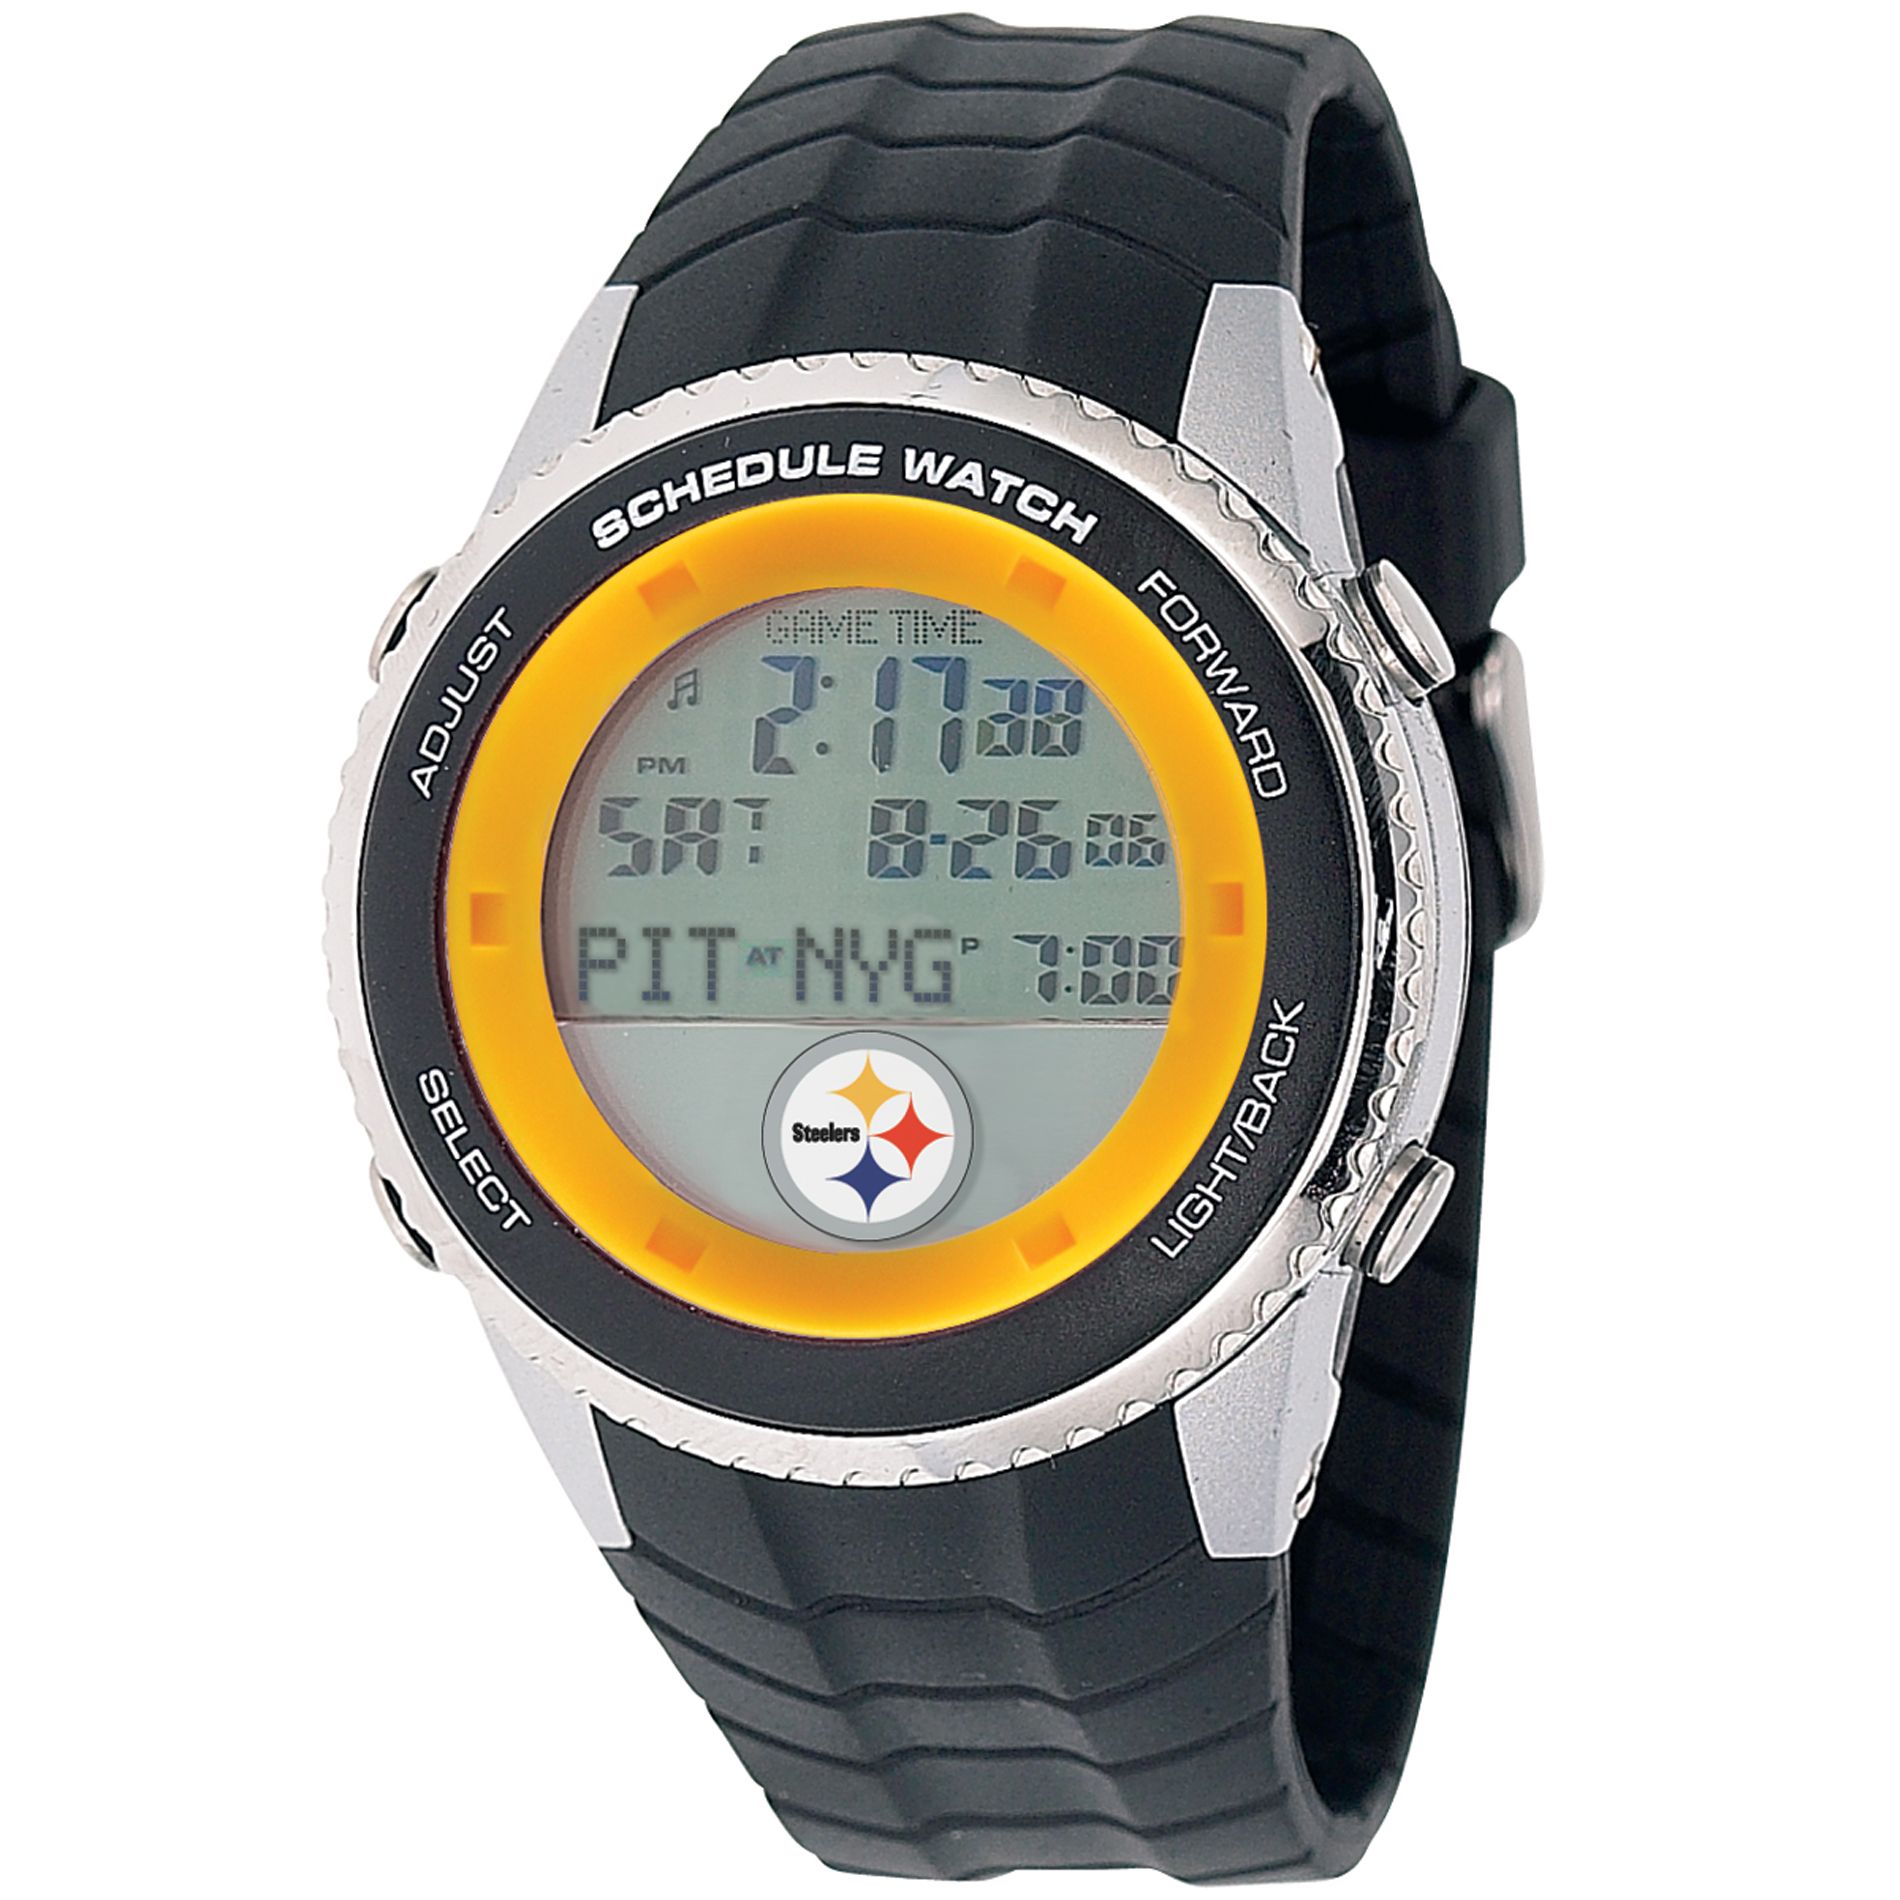 Pittsburgh Steelers Schedule Watch